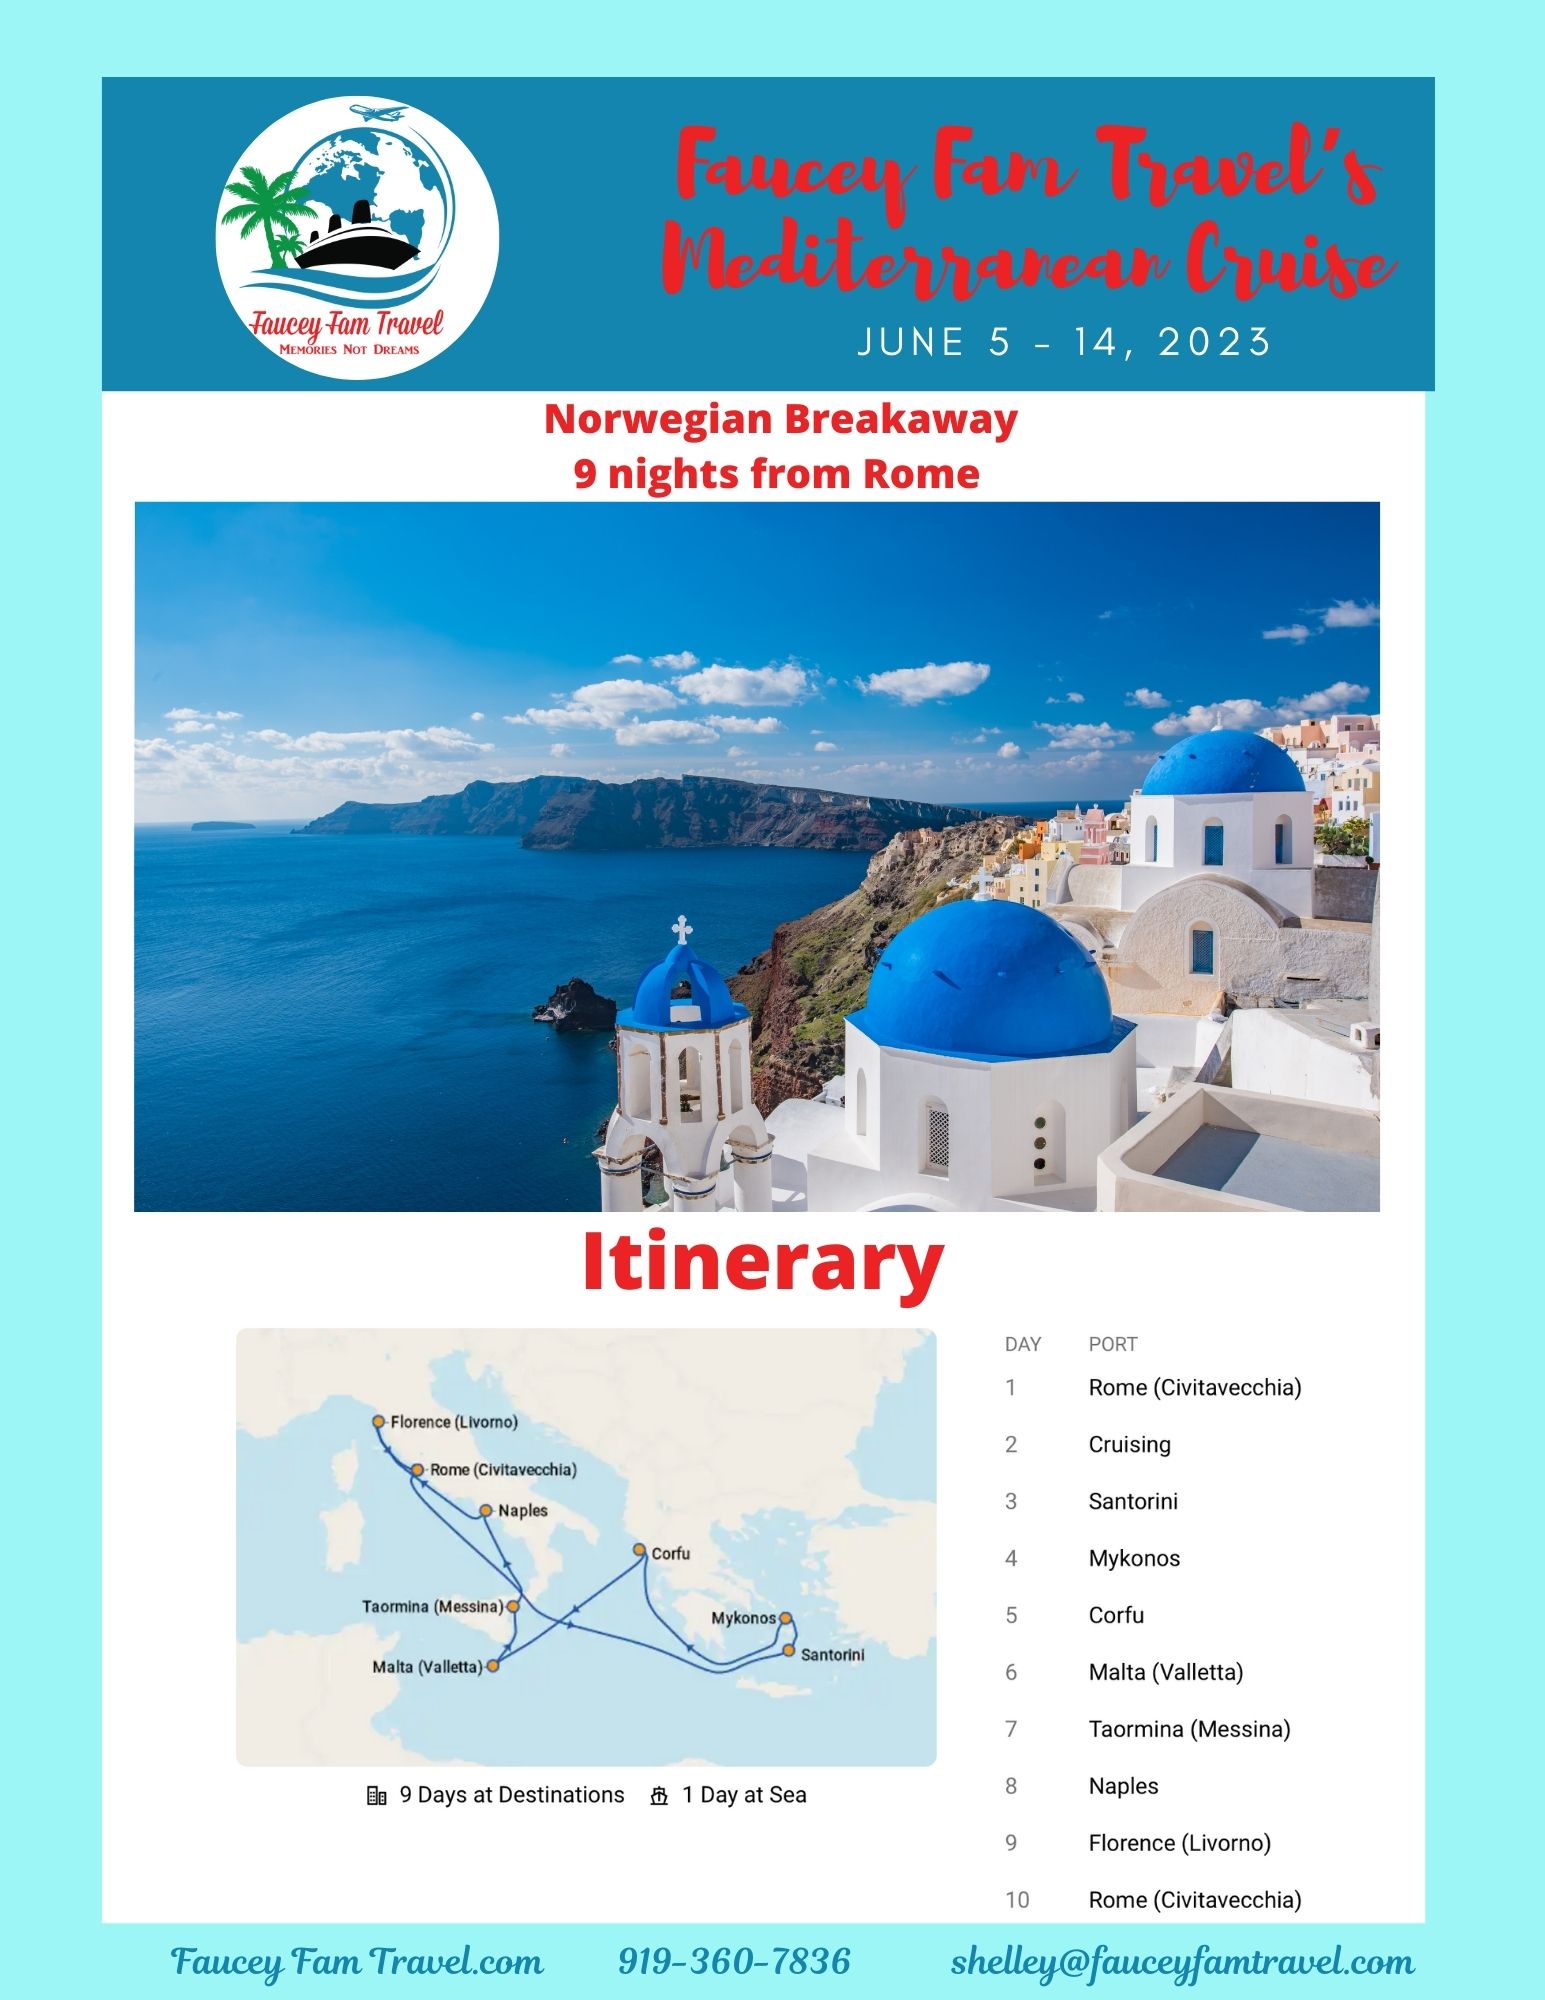 Faucey Fam Travel's Mediterranean Cruise